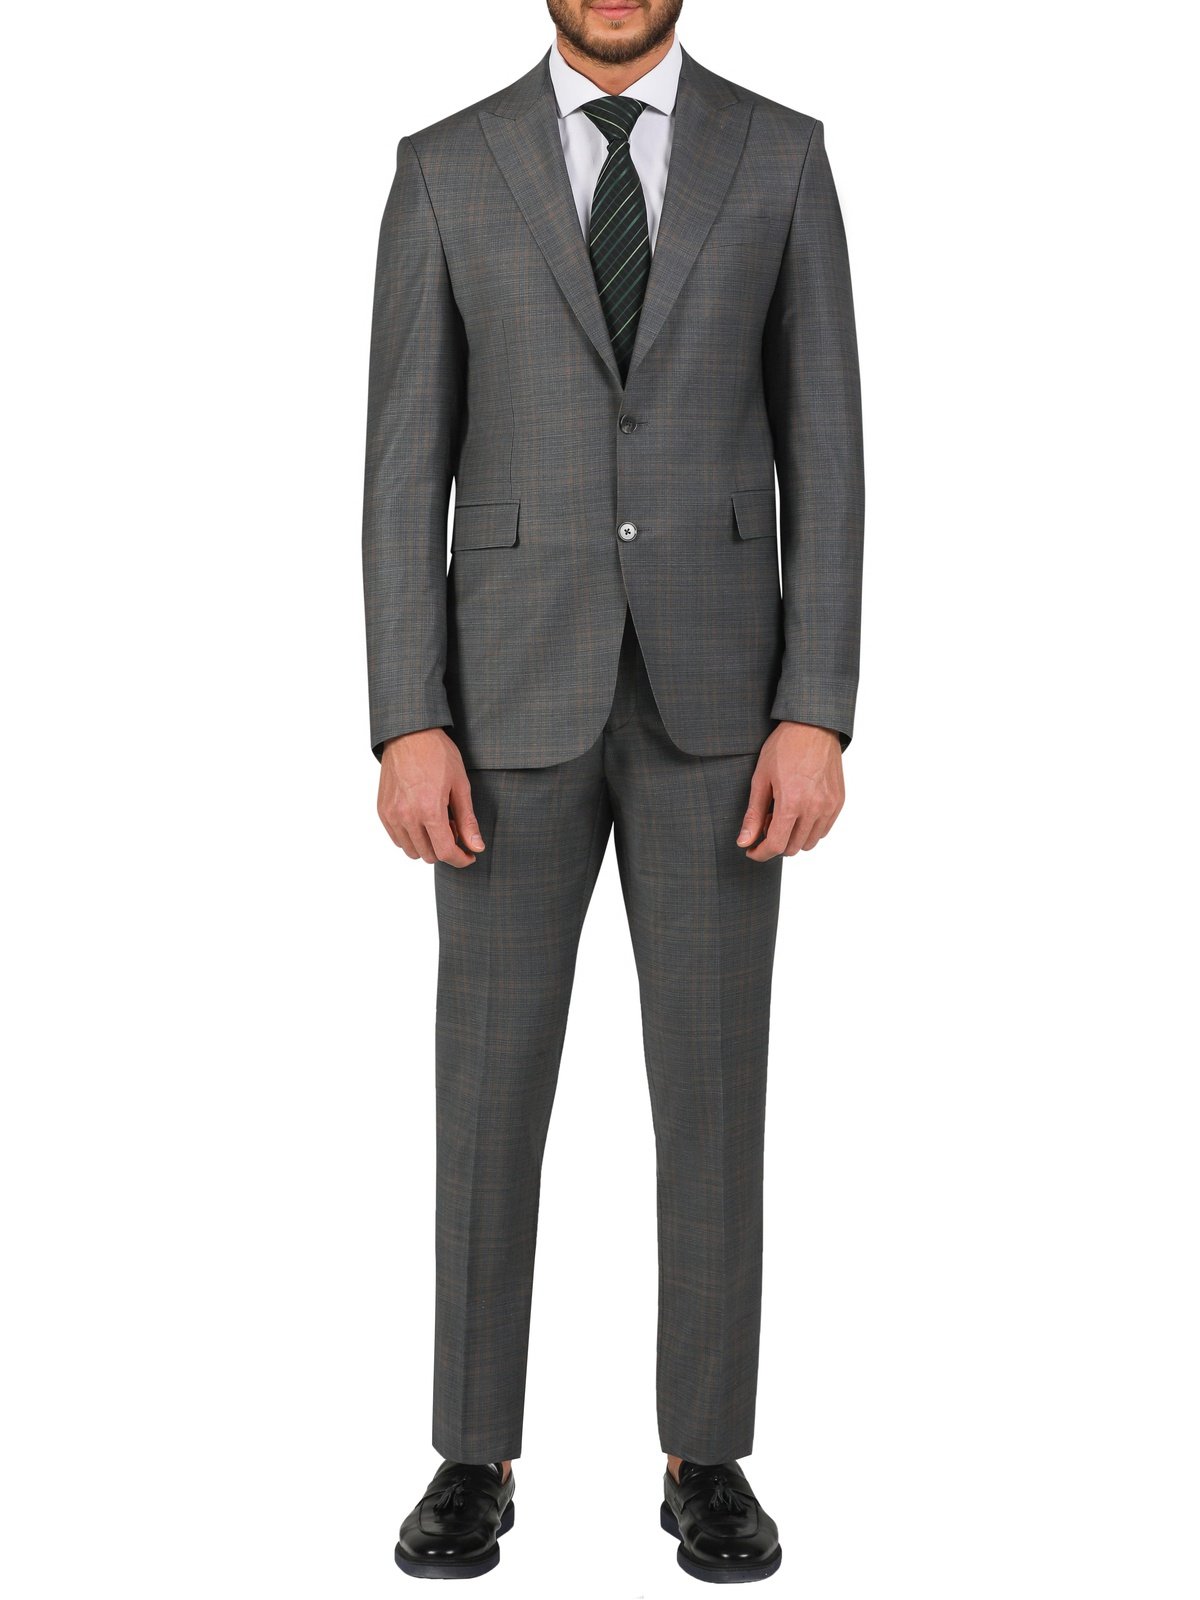 Di'nucci SUITS 36S Di'nucci Light Gray With Brown Windowpane Peak Lapel Wool Suit